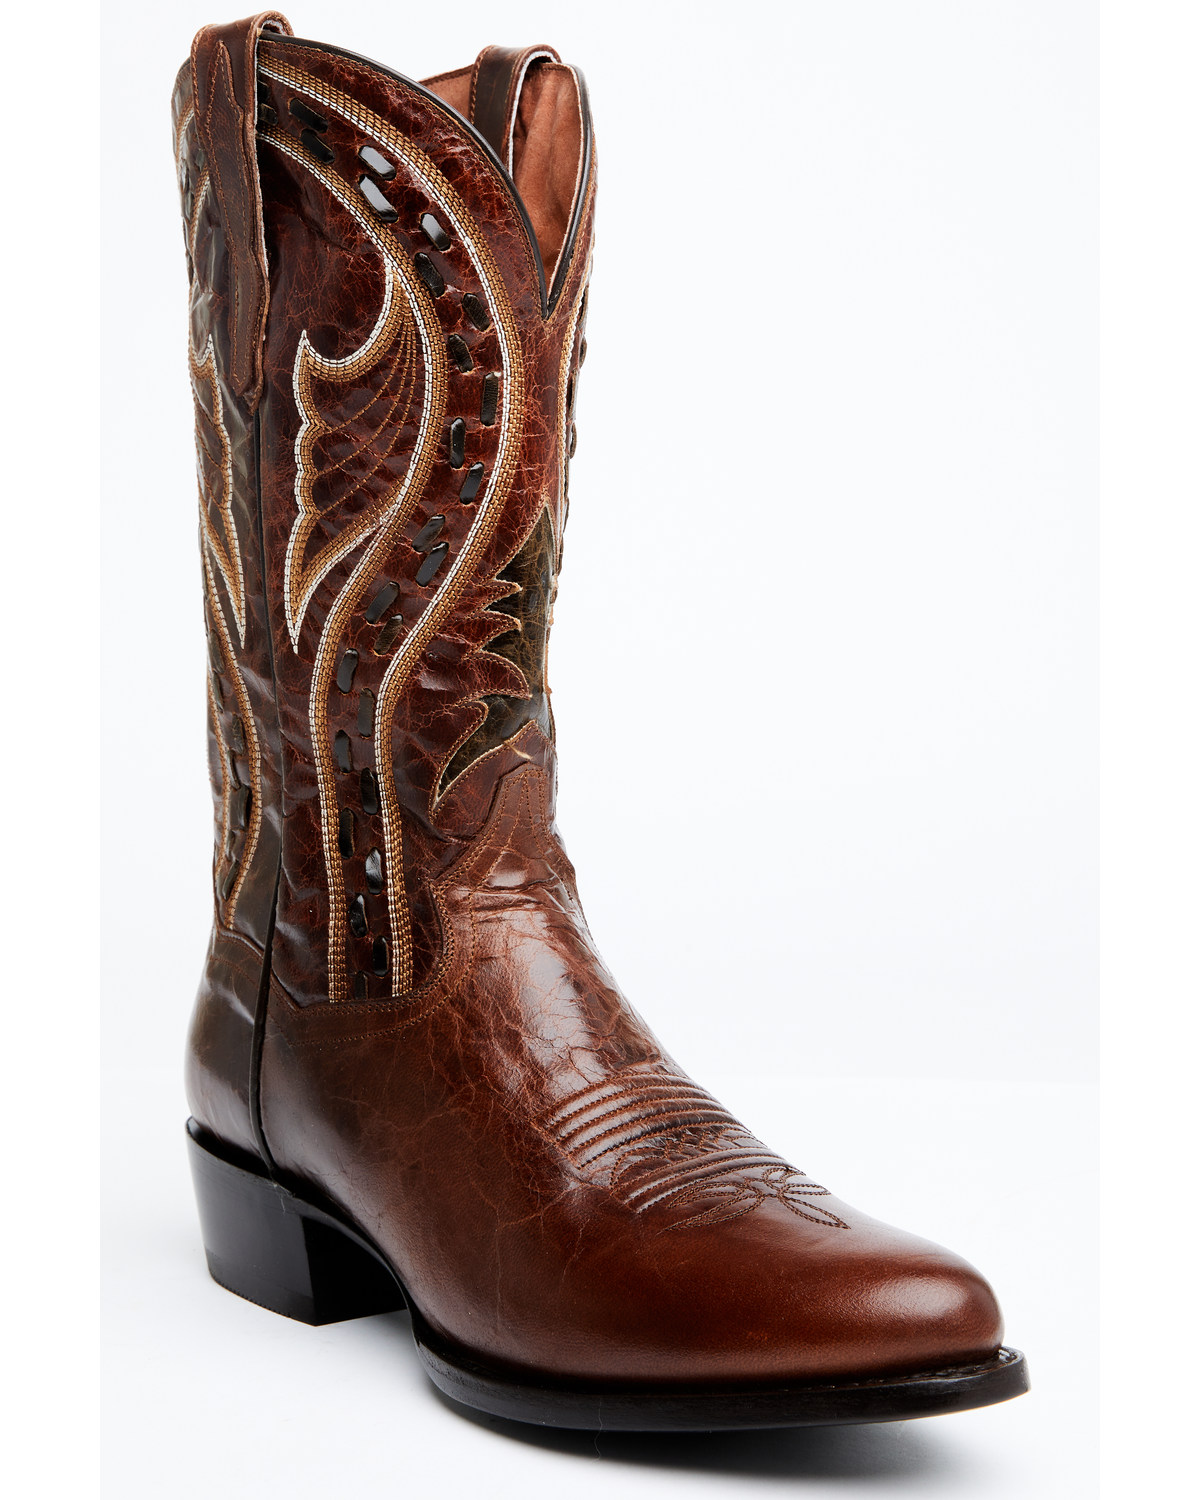 Dan Post Men's Swirled Embroidery Western Boots - Medium Toe